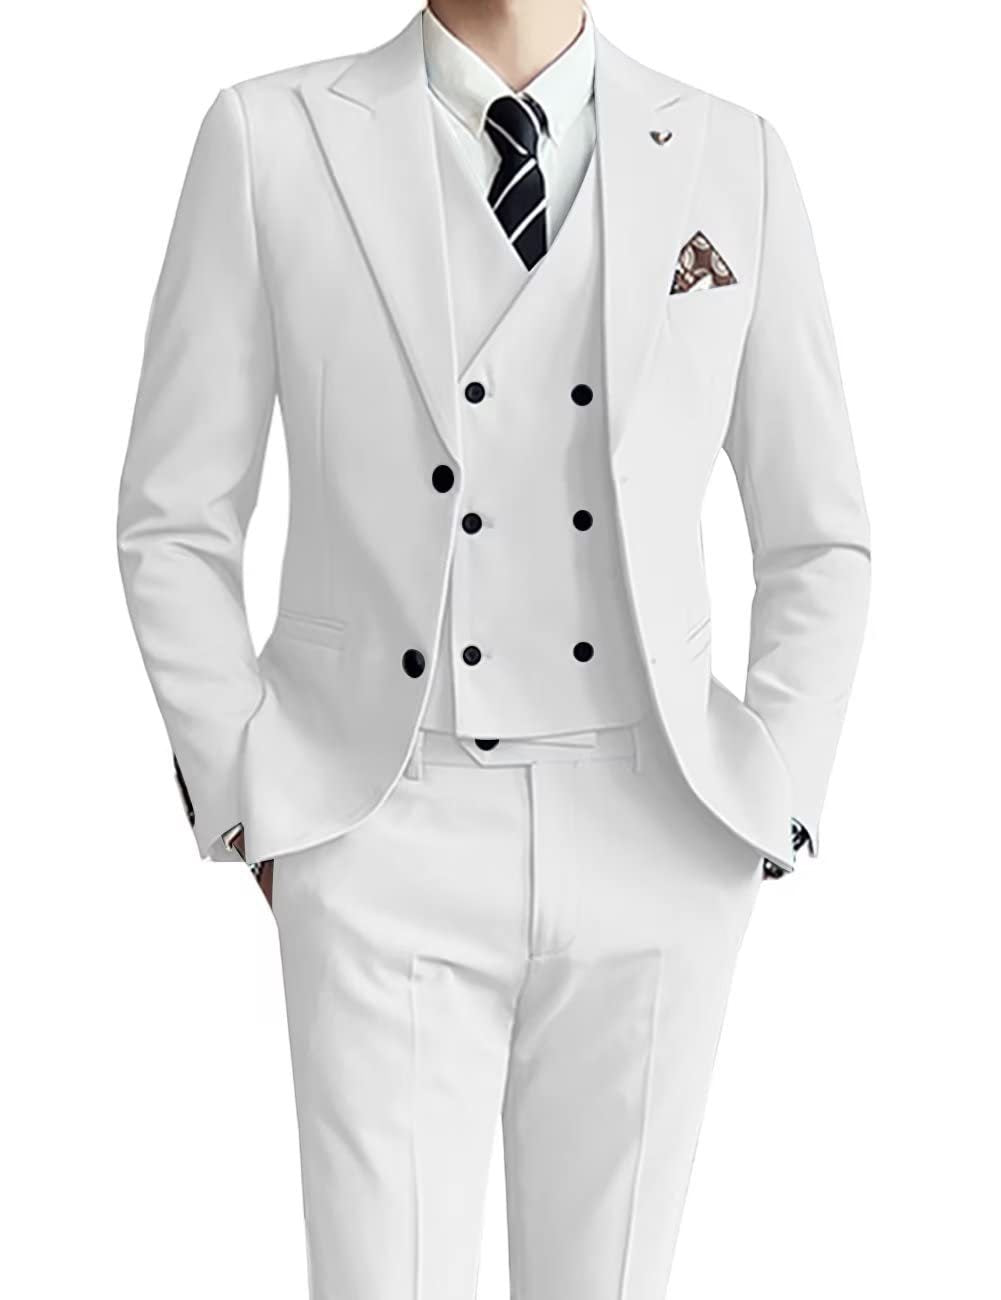 Three-piece Men's Suit Slim Fit Suit